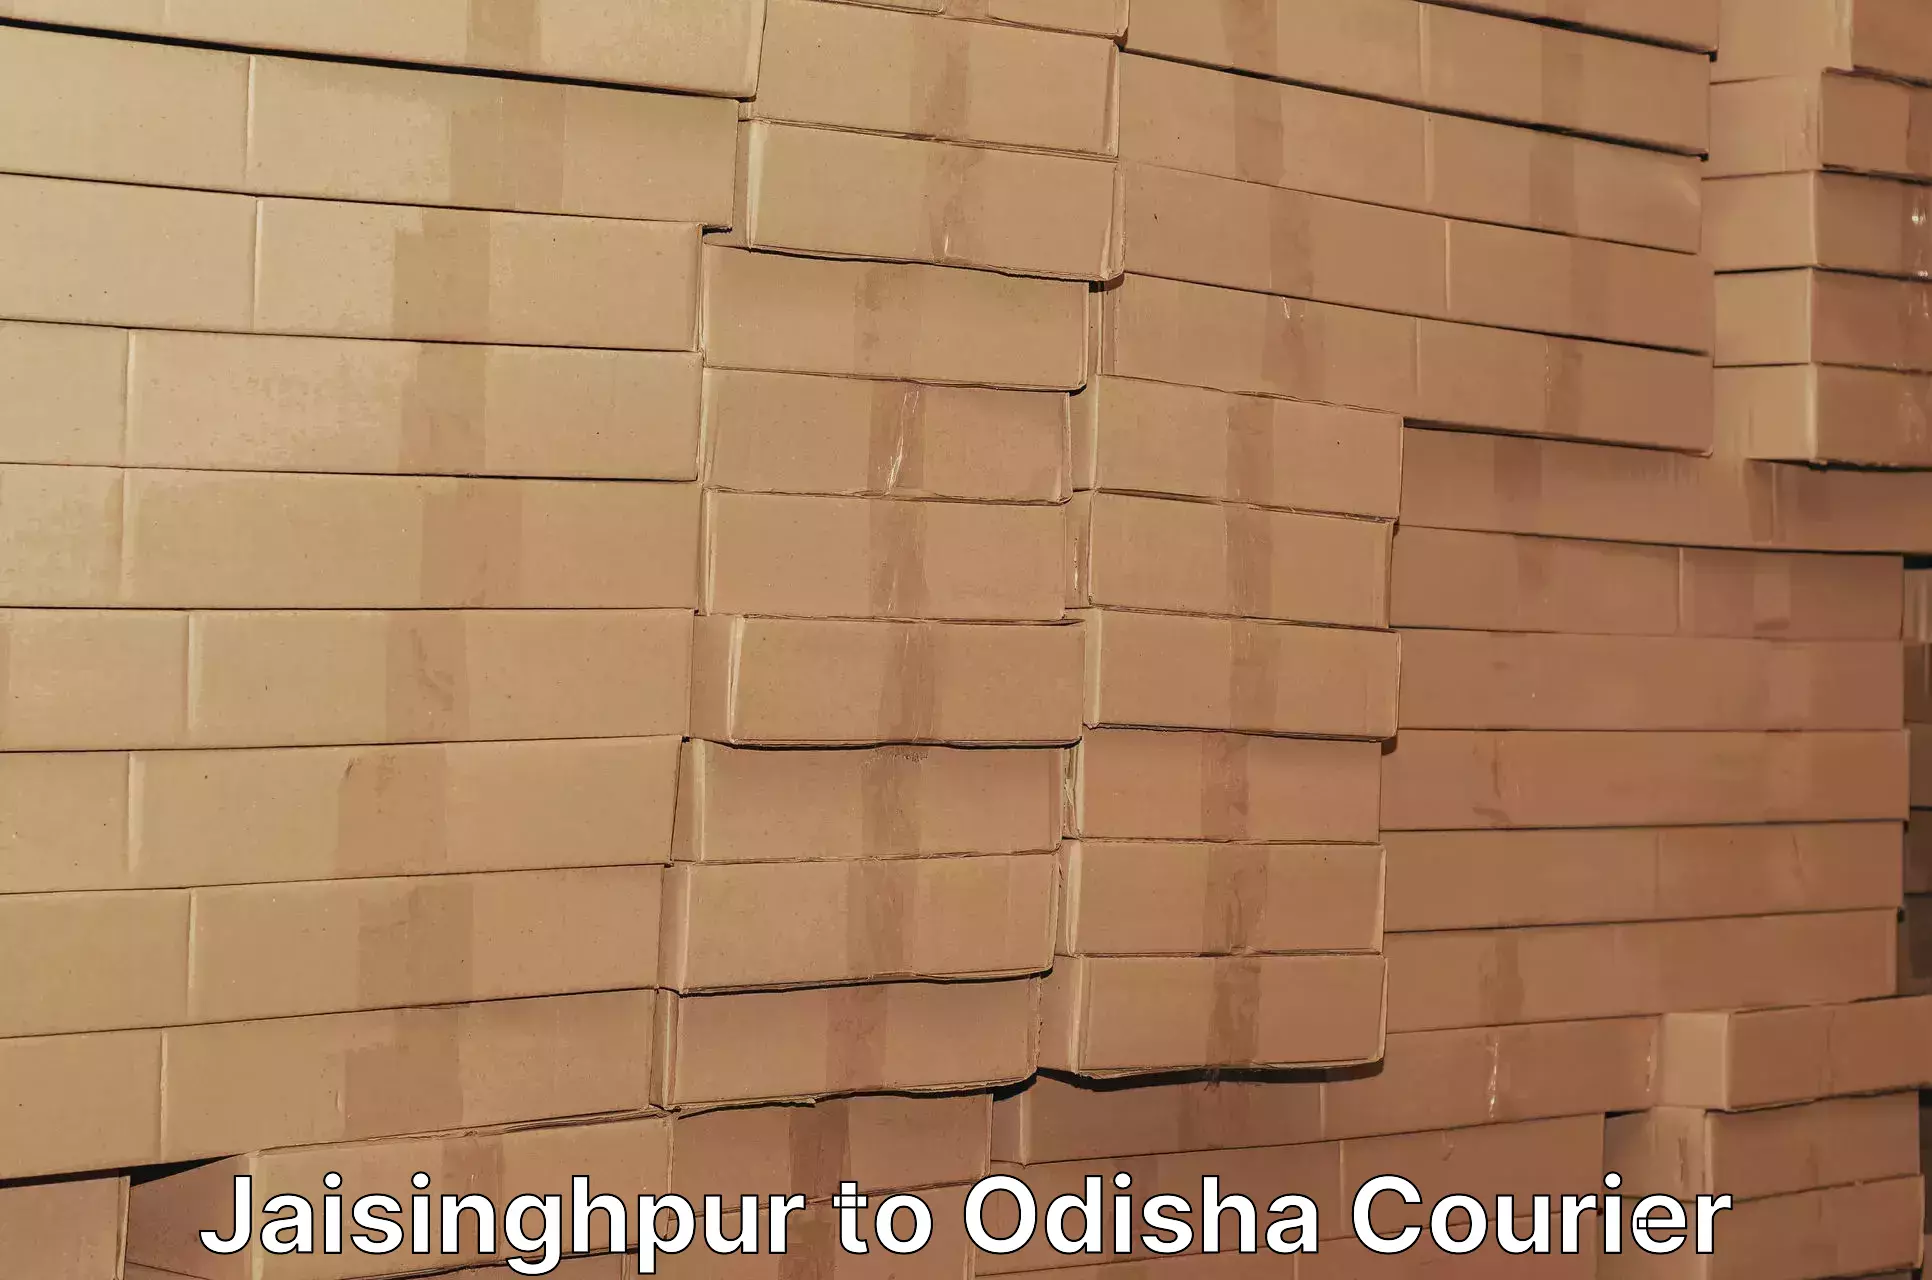 Efficient order fulfillment Jaisinghpur to Binjharpur